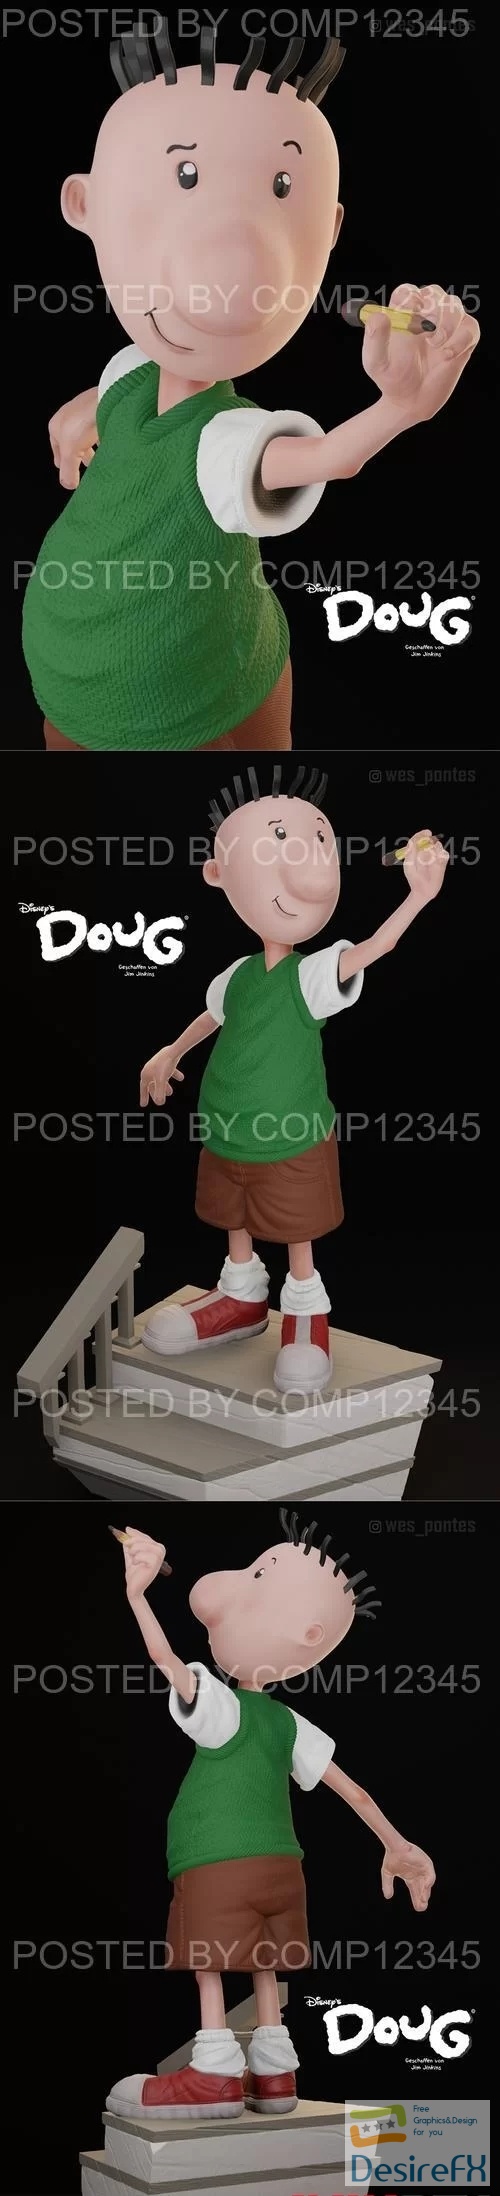 Doug Funnie - Wesley Pontes 3D Print